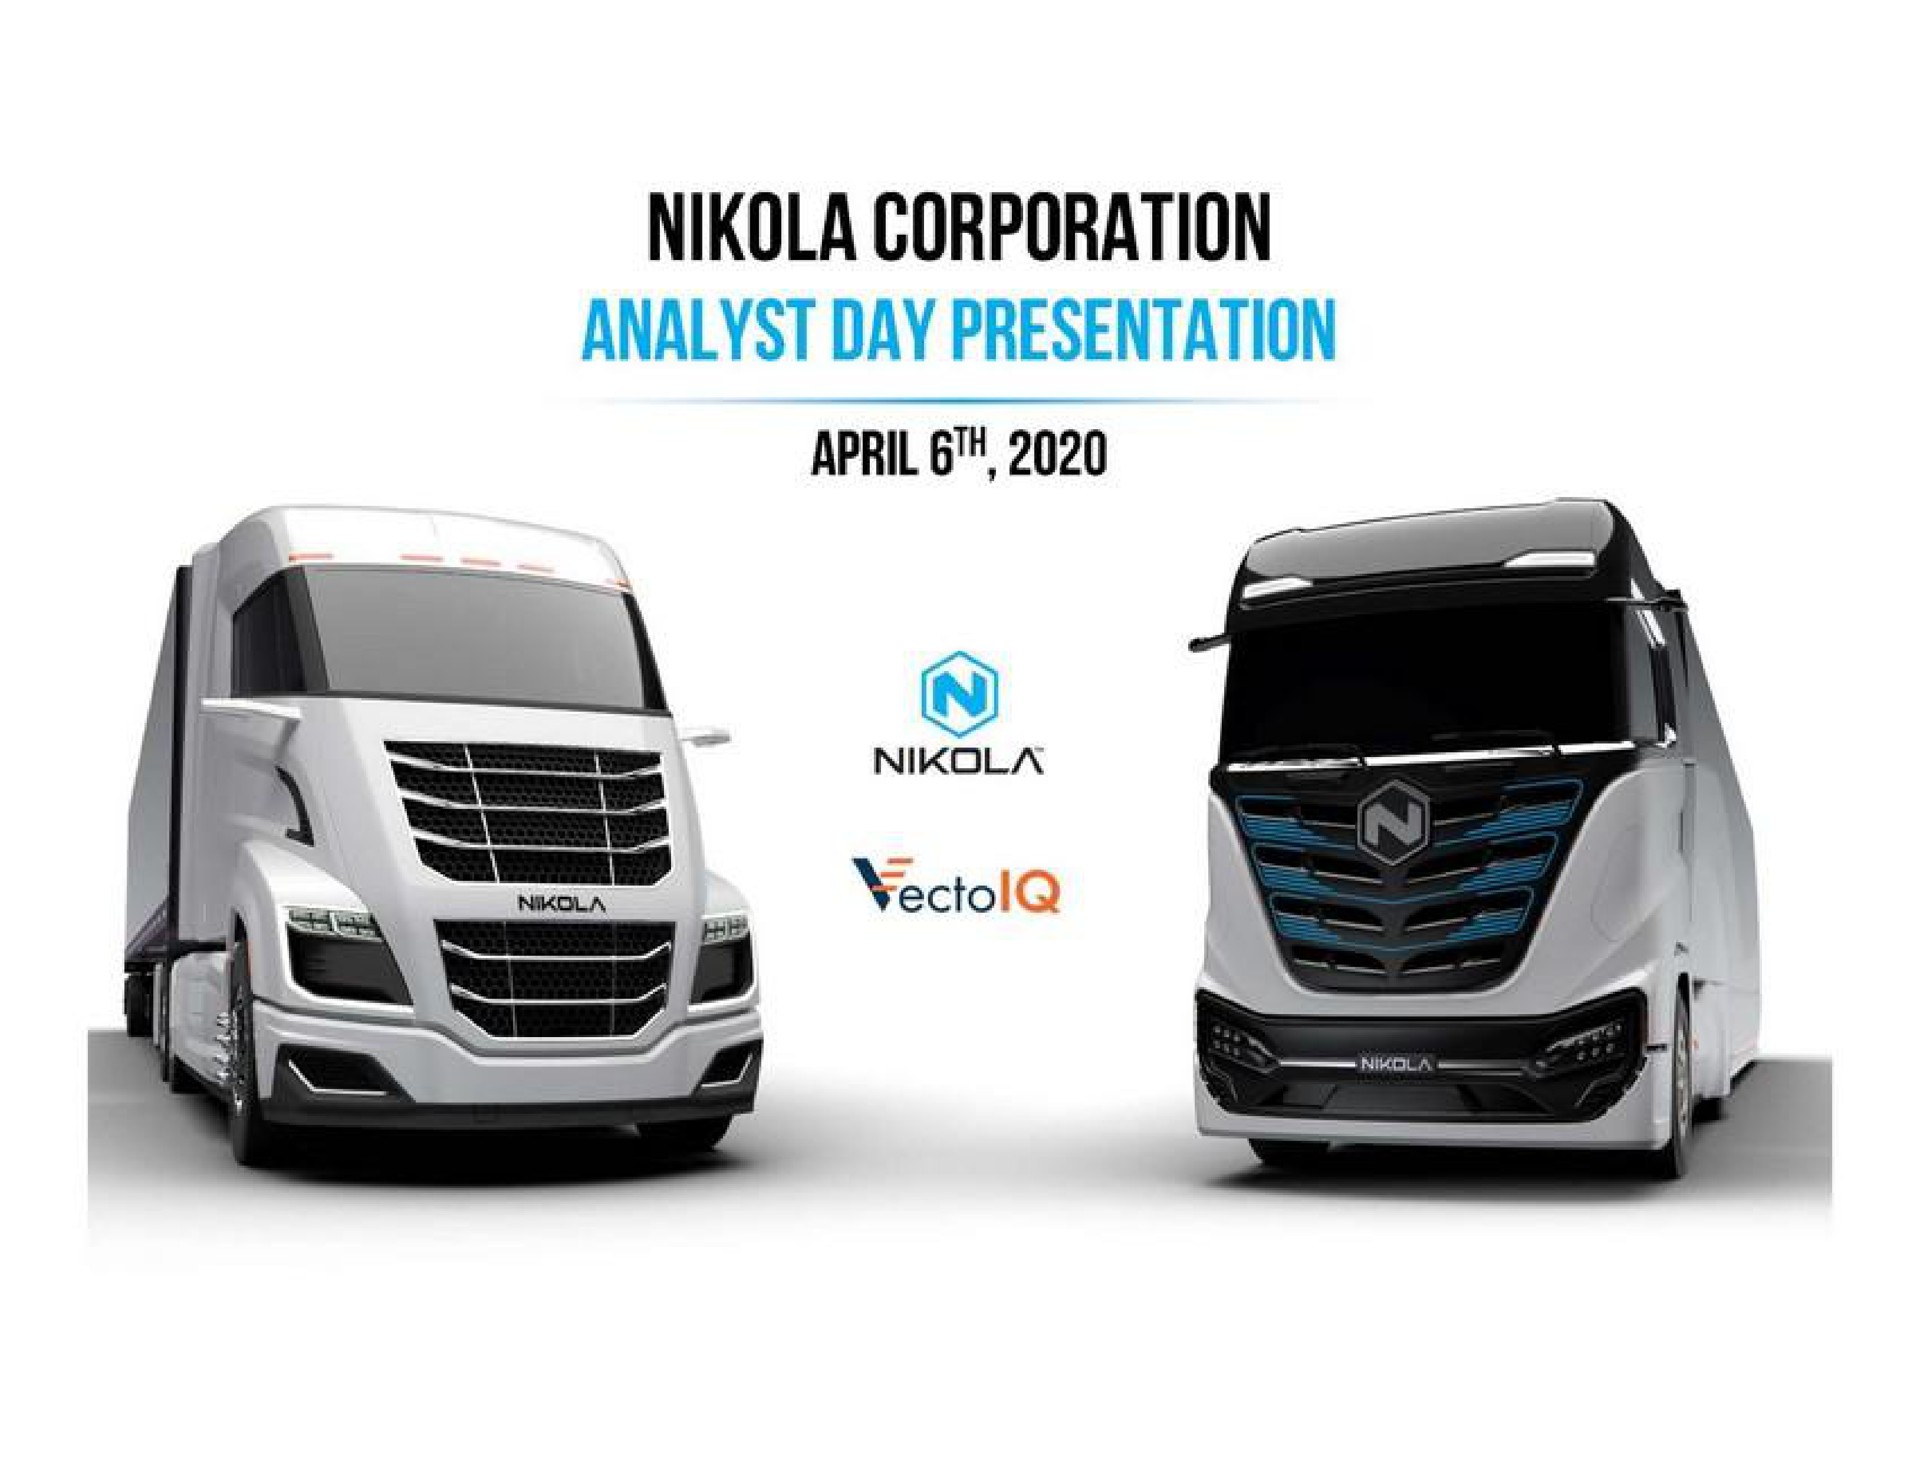 corporation analyst day presentation | Nikola